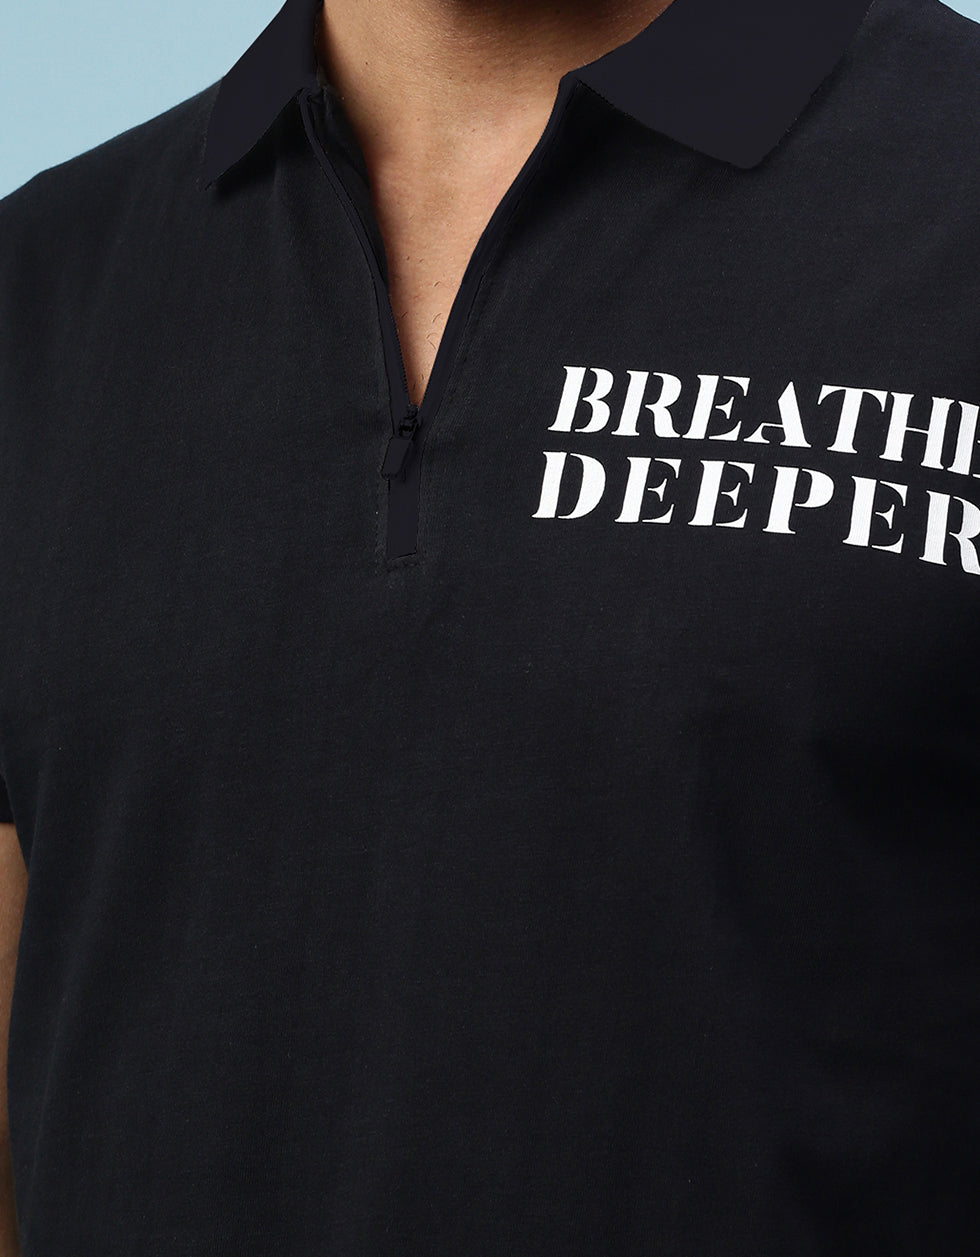 Breath Deeper Printed Polo Zip T-Shirt Veirdo